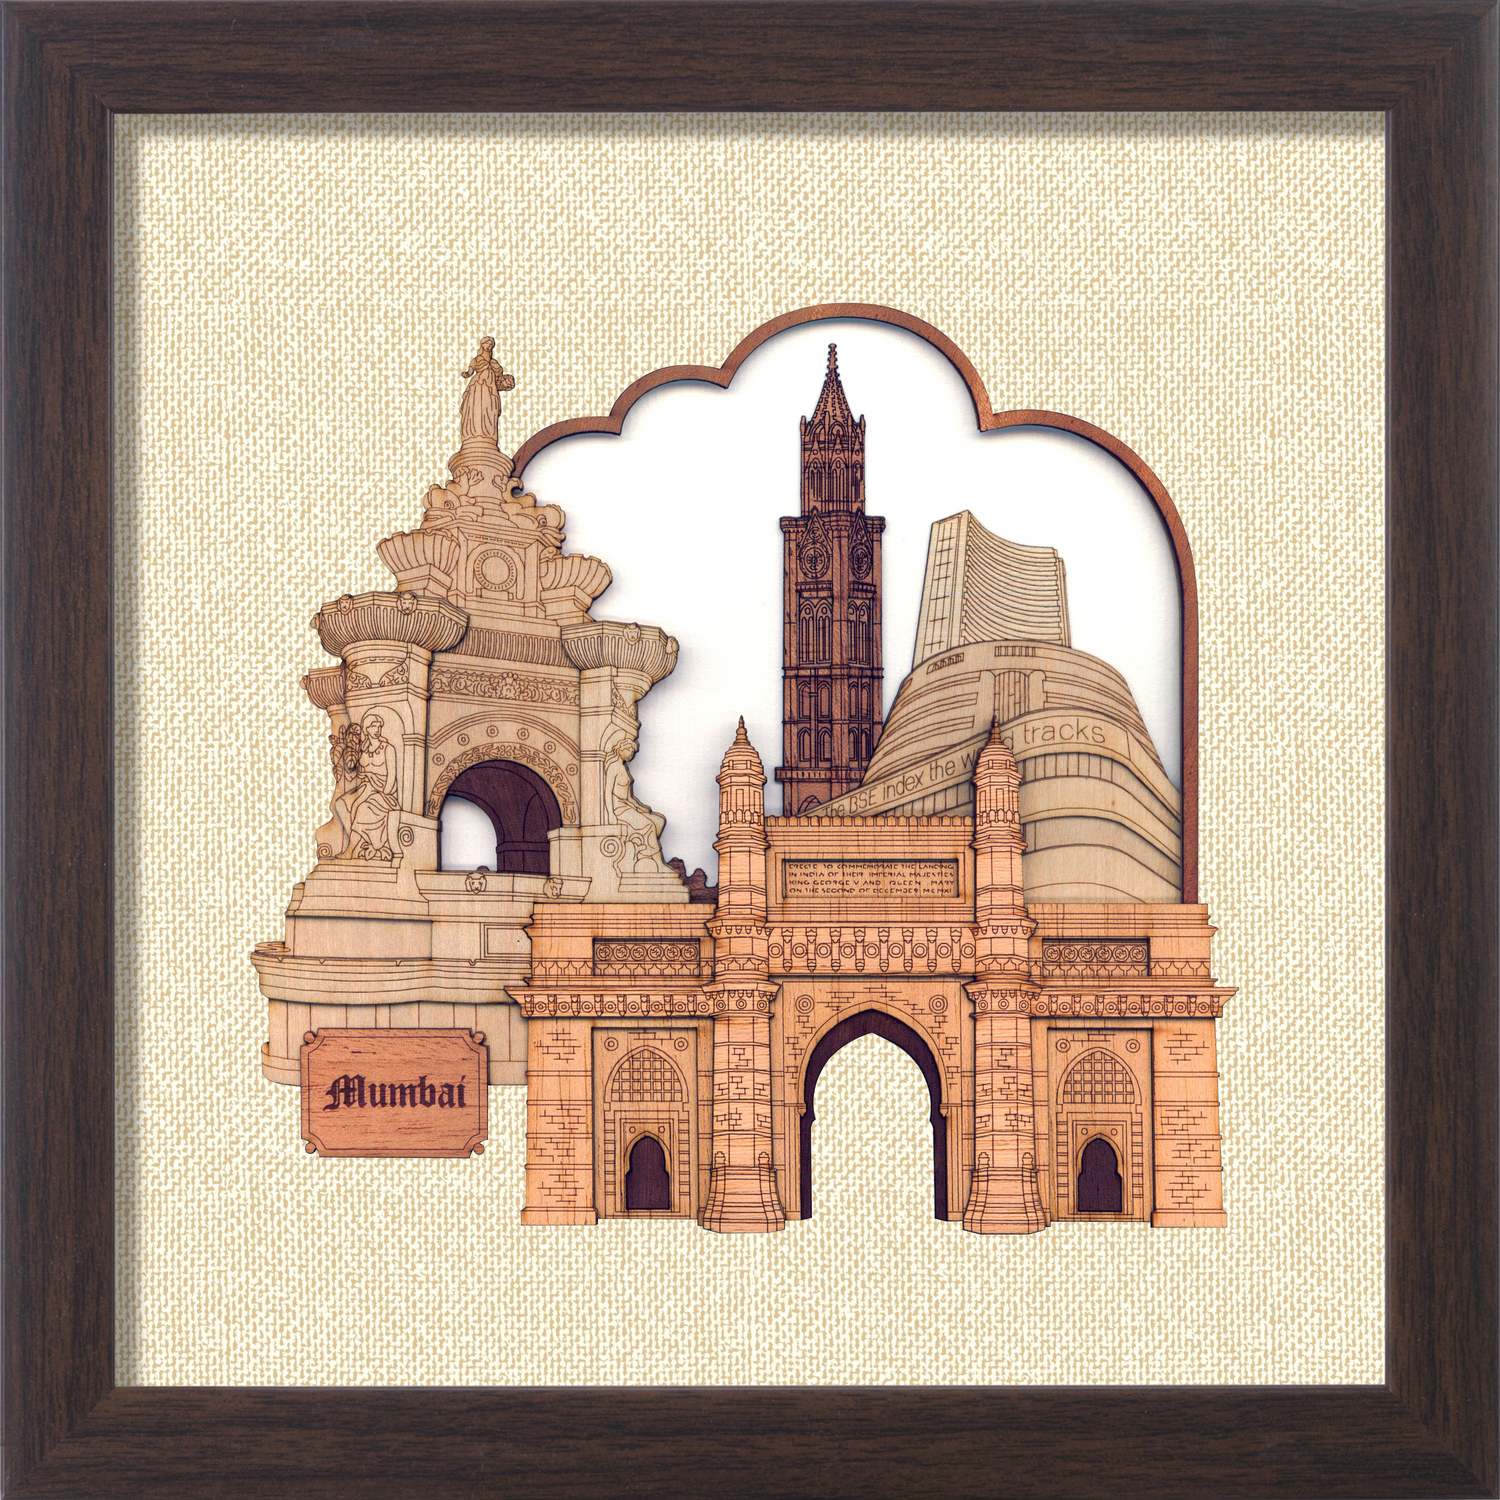 Mumbai Monuments